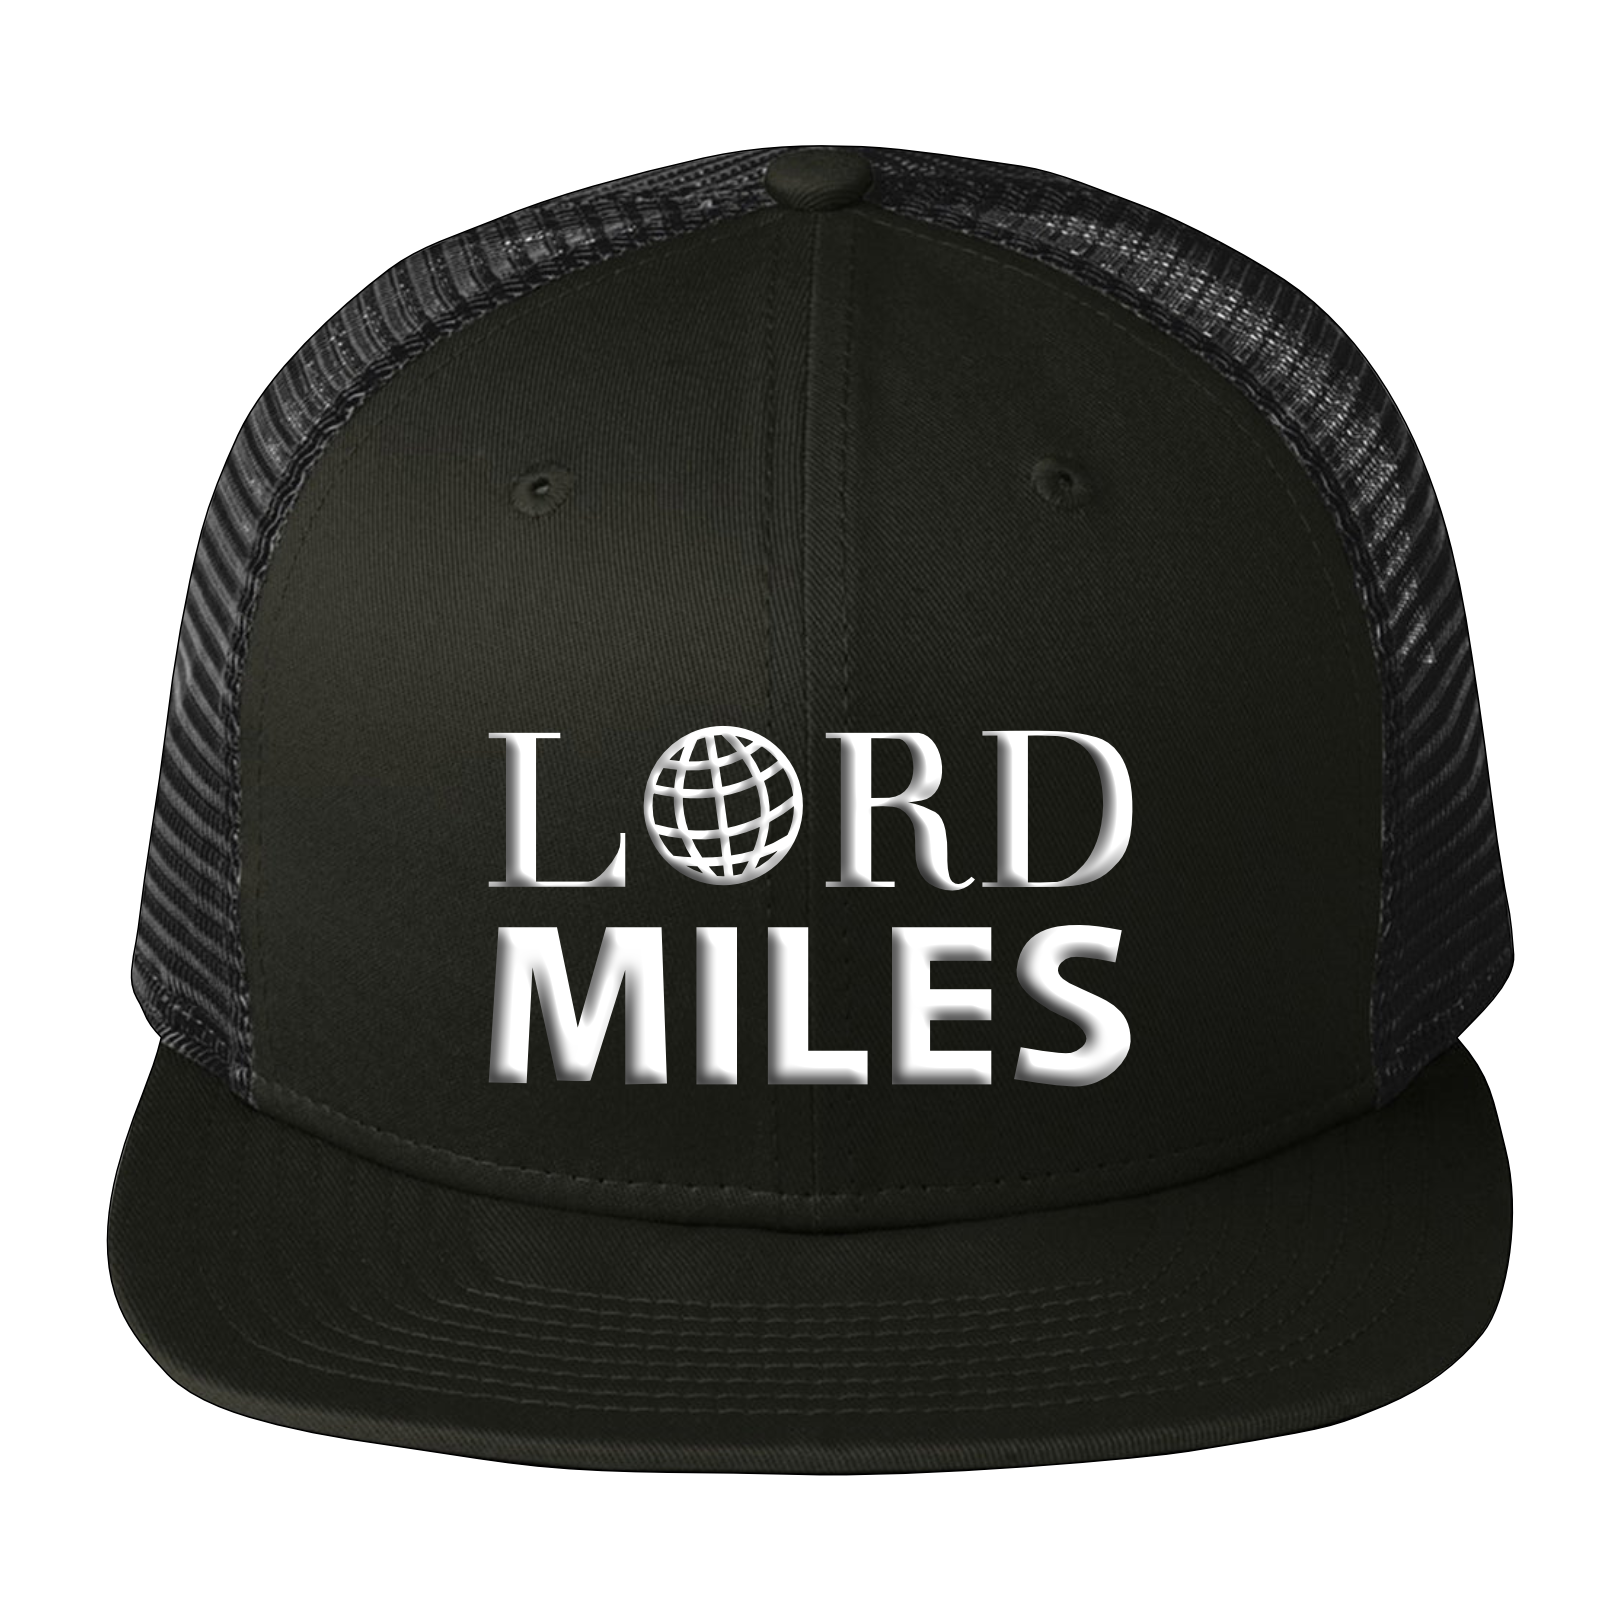 Lord Mile Logo Tanktop